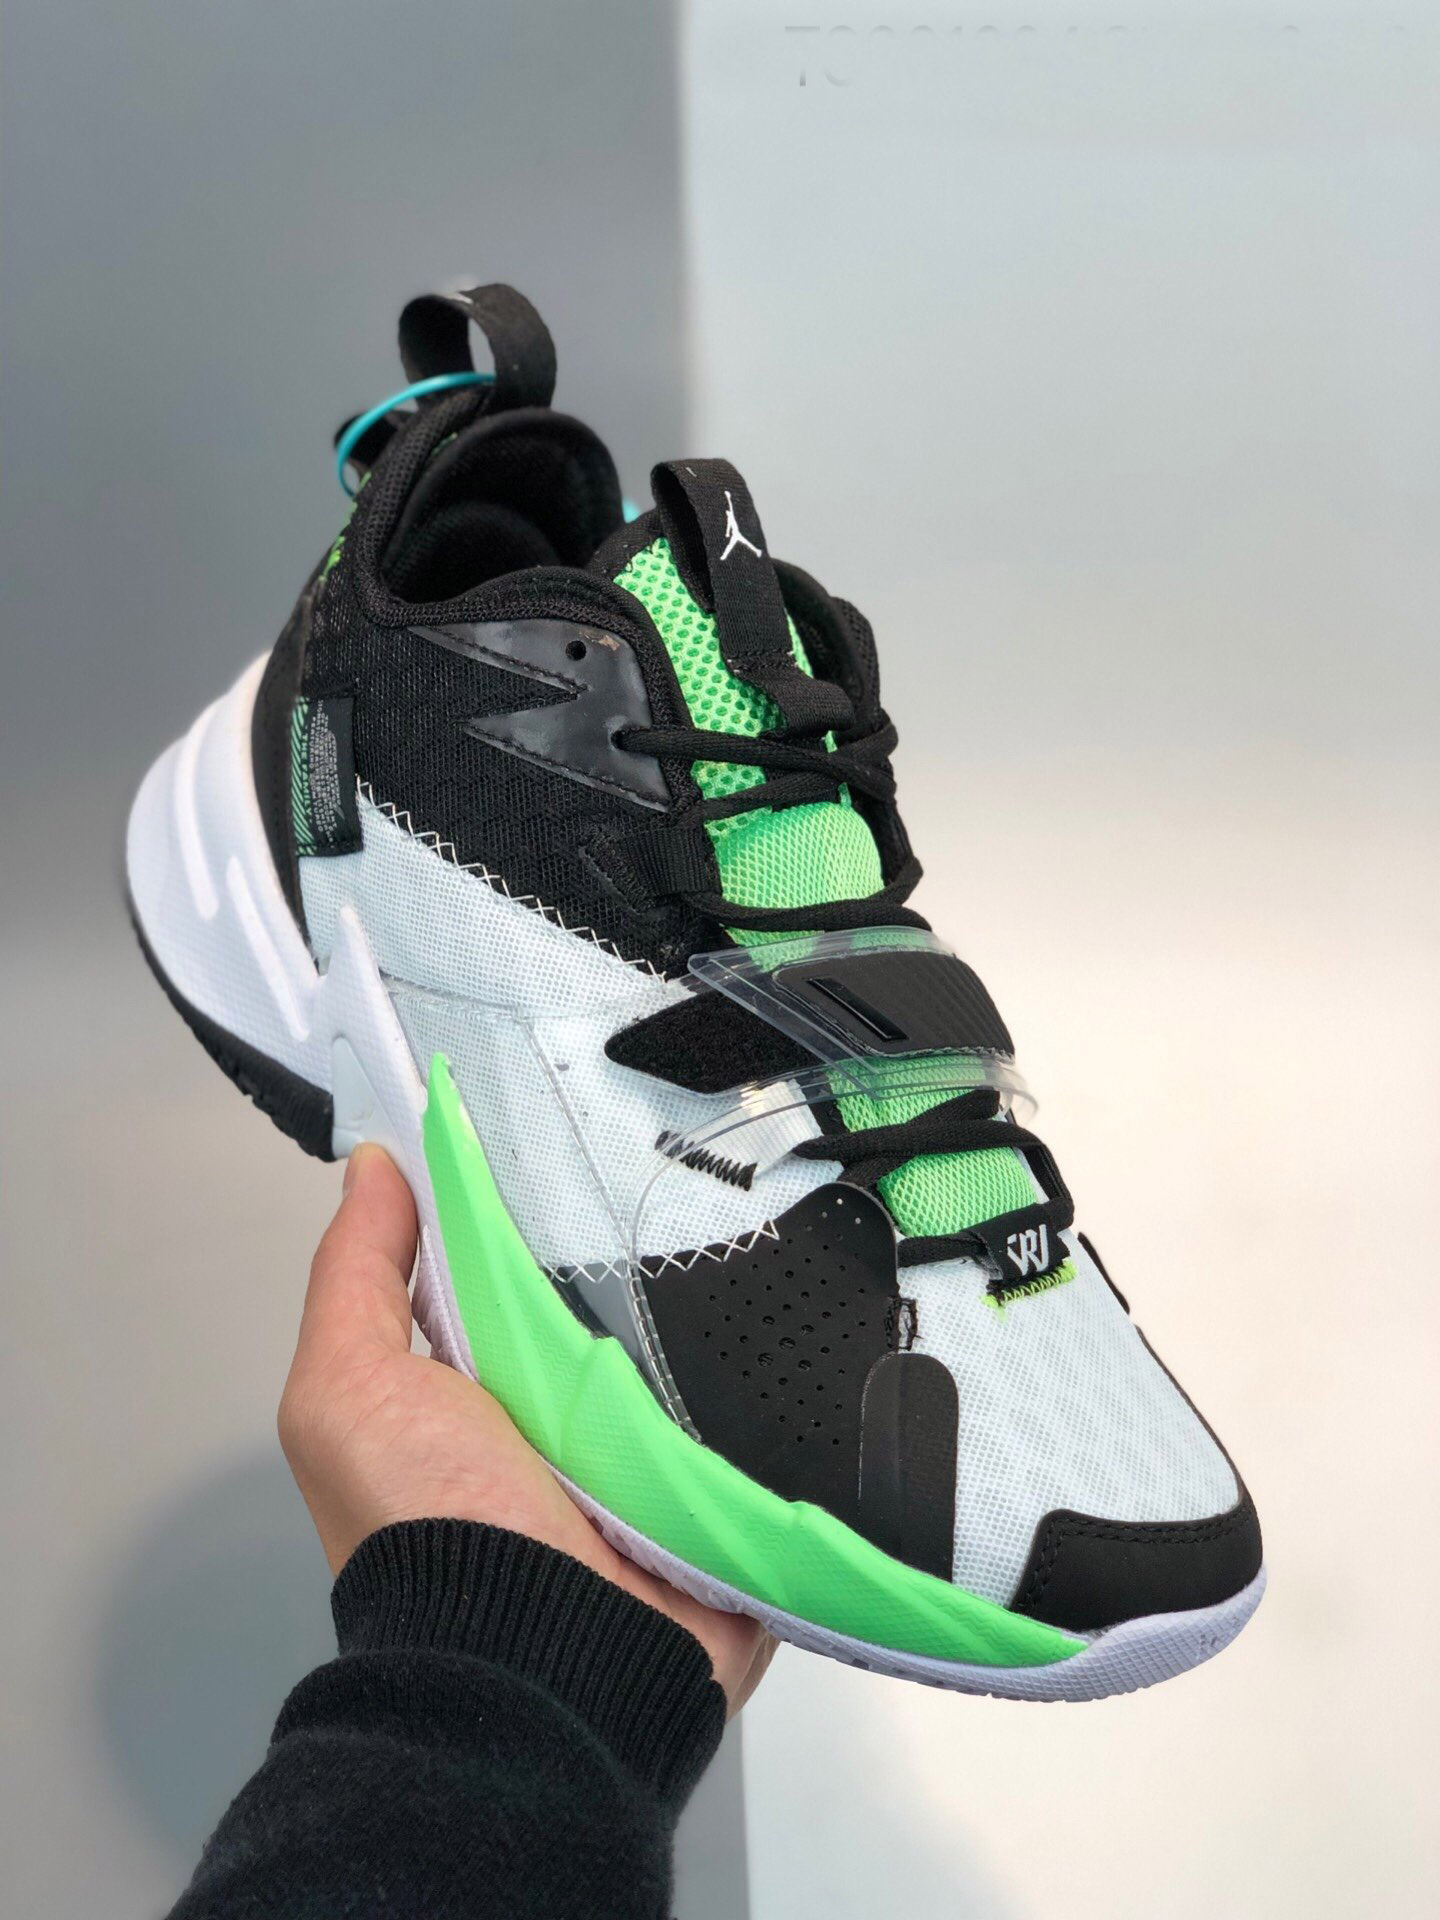 Jordan Why Not Zer0.3 Black White Green Shoes